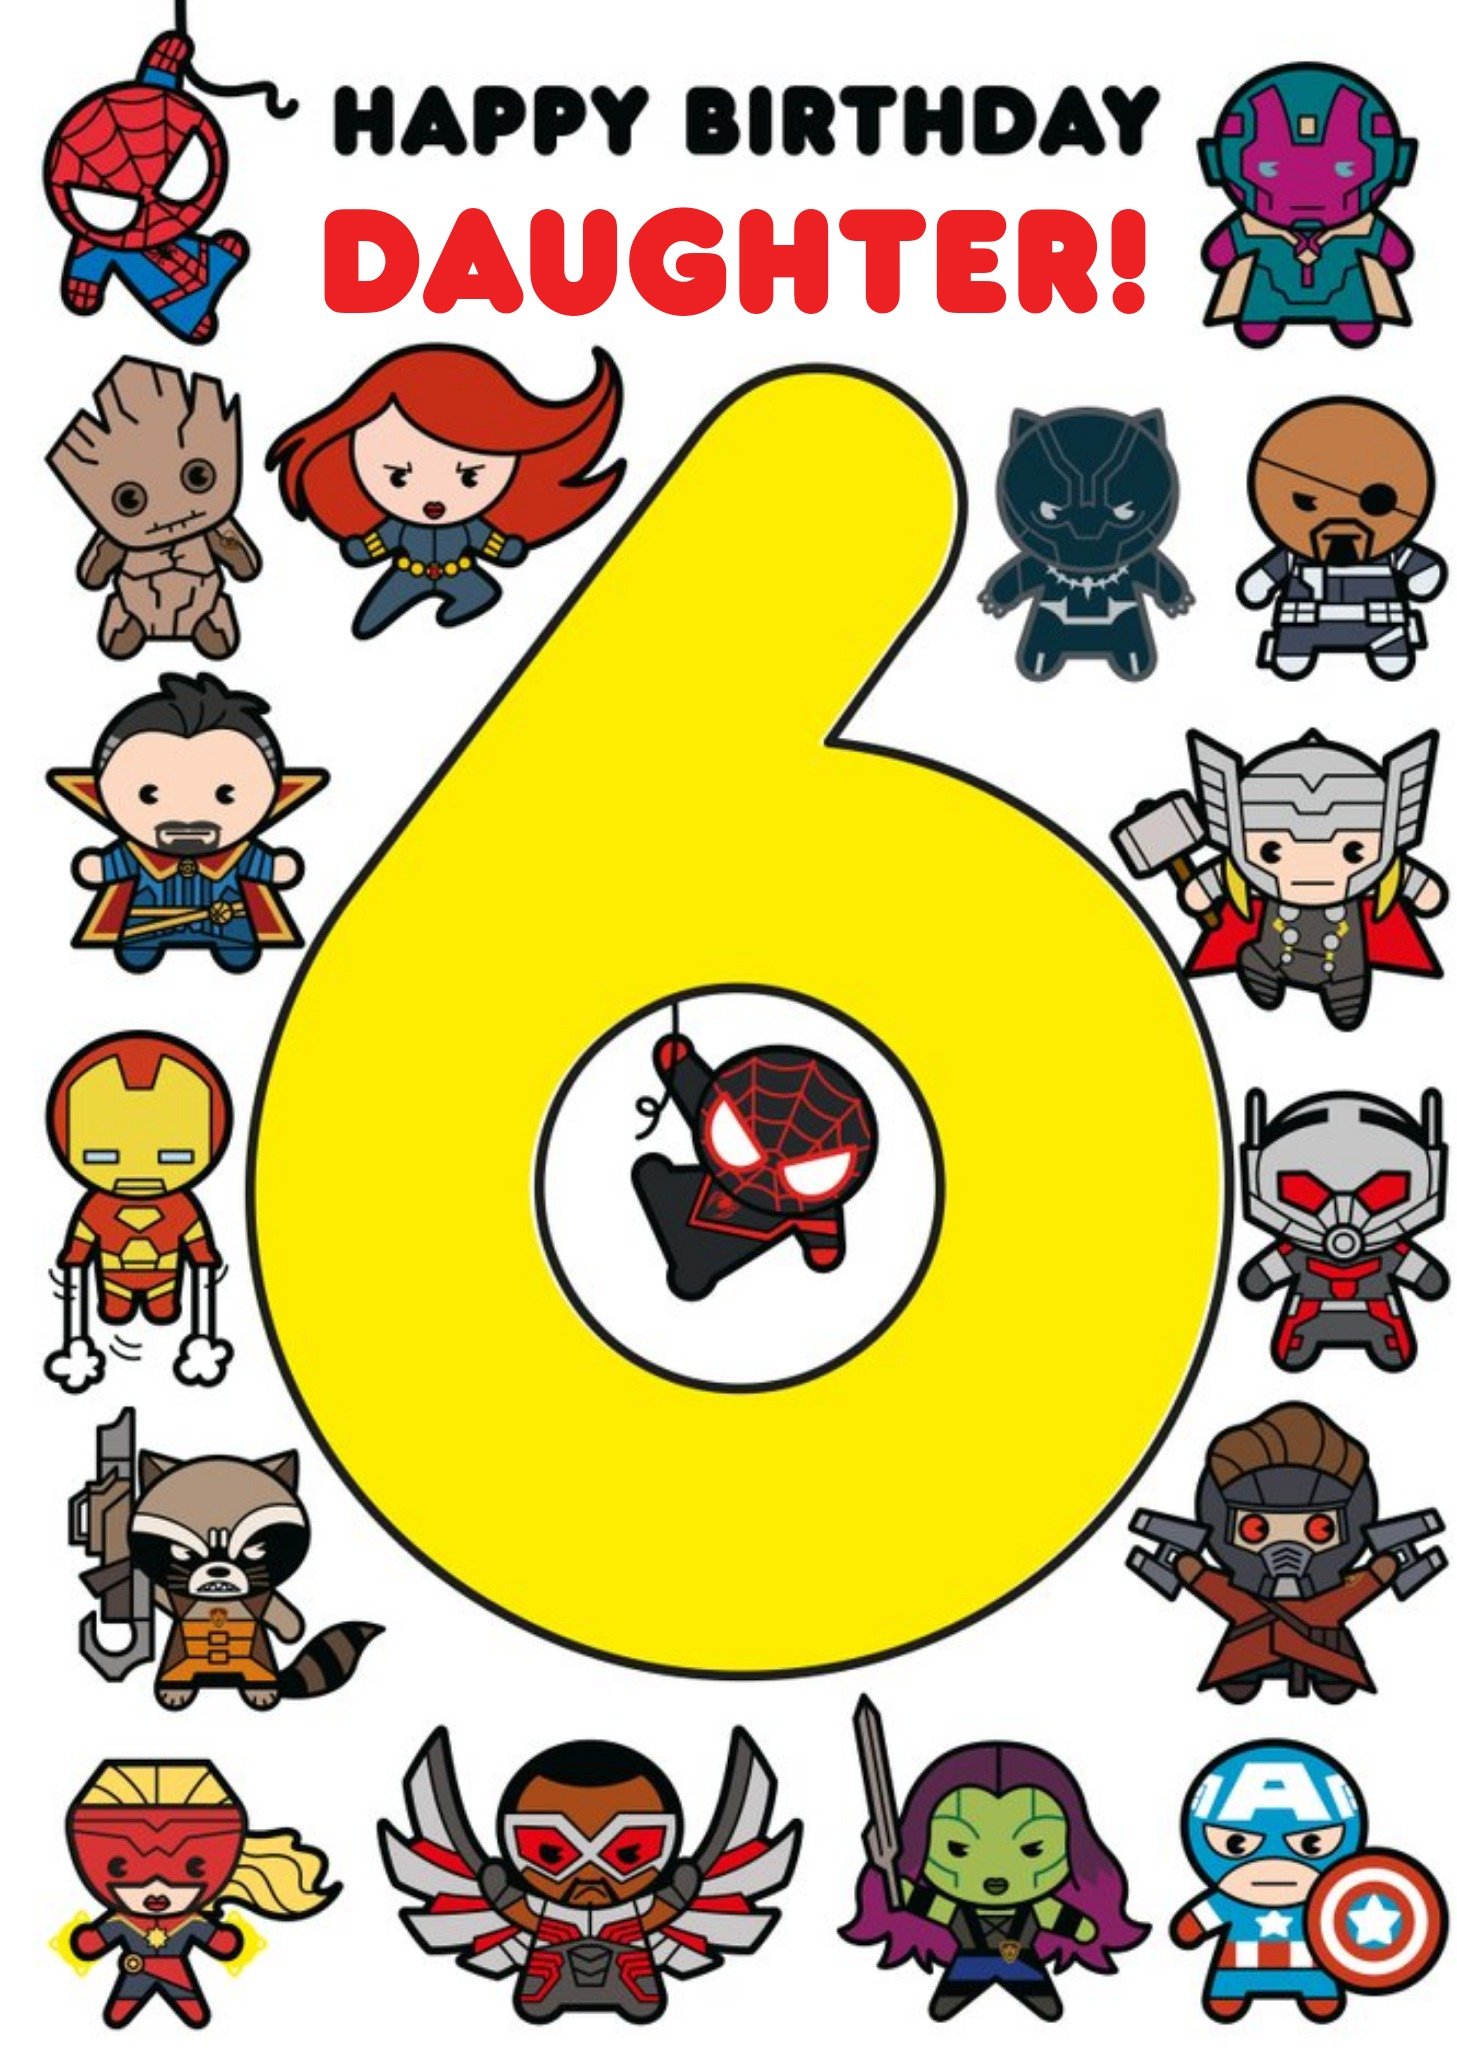 Disney Marvel Comics Characters 6 Daughter Card Ecard